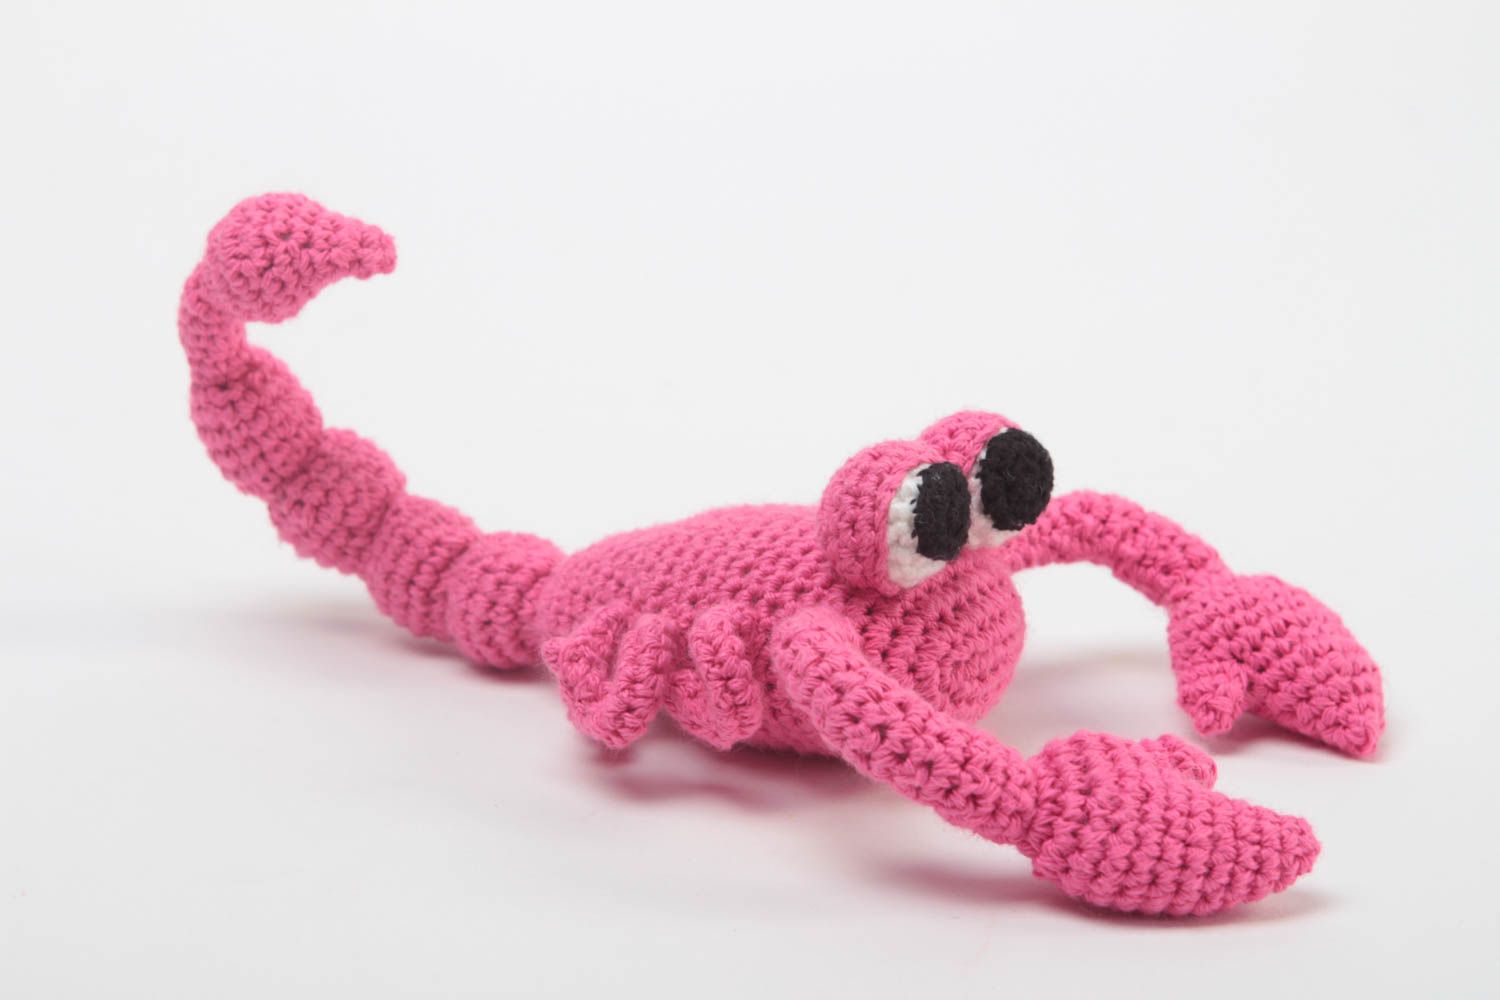 Cute handmade crochet toy unusual stuffed toy childrens soft toys gift ideas photo 2